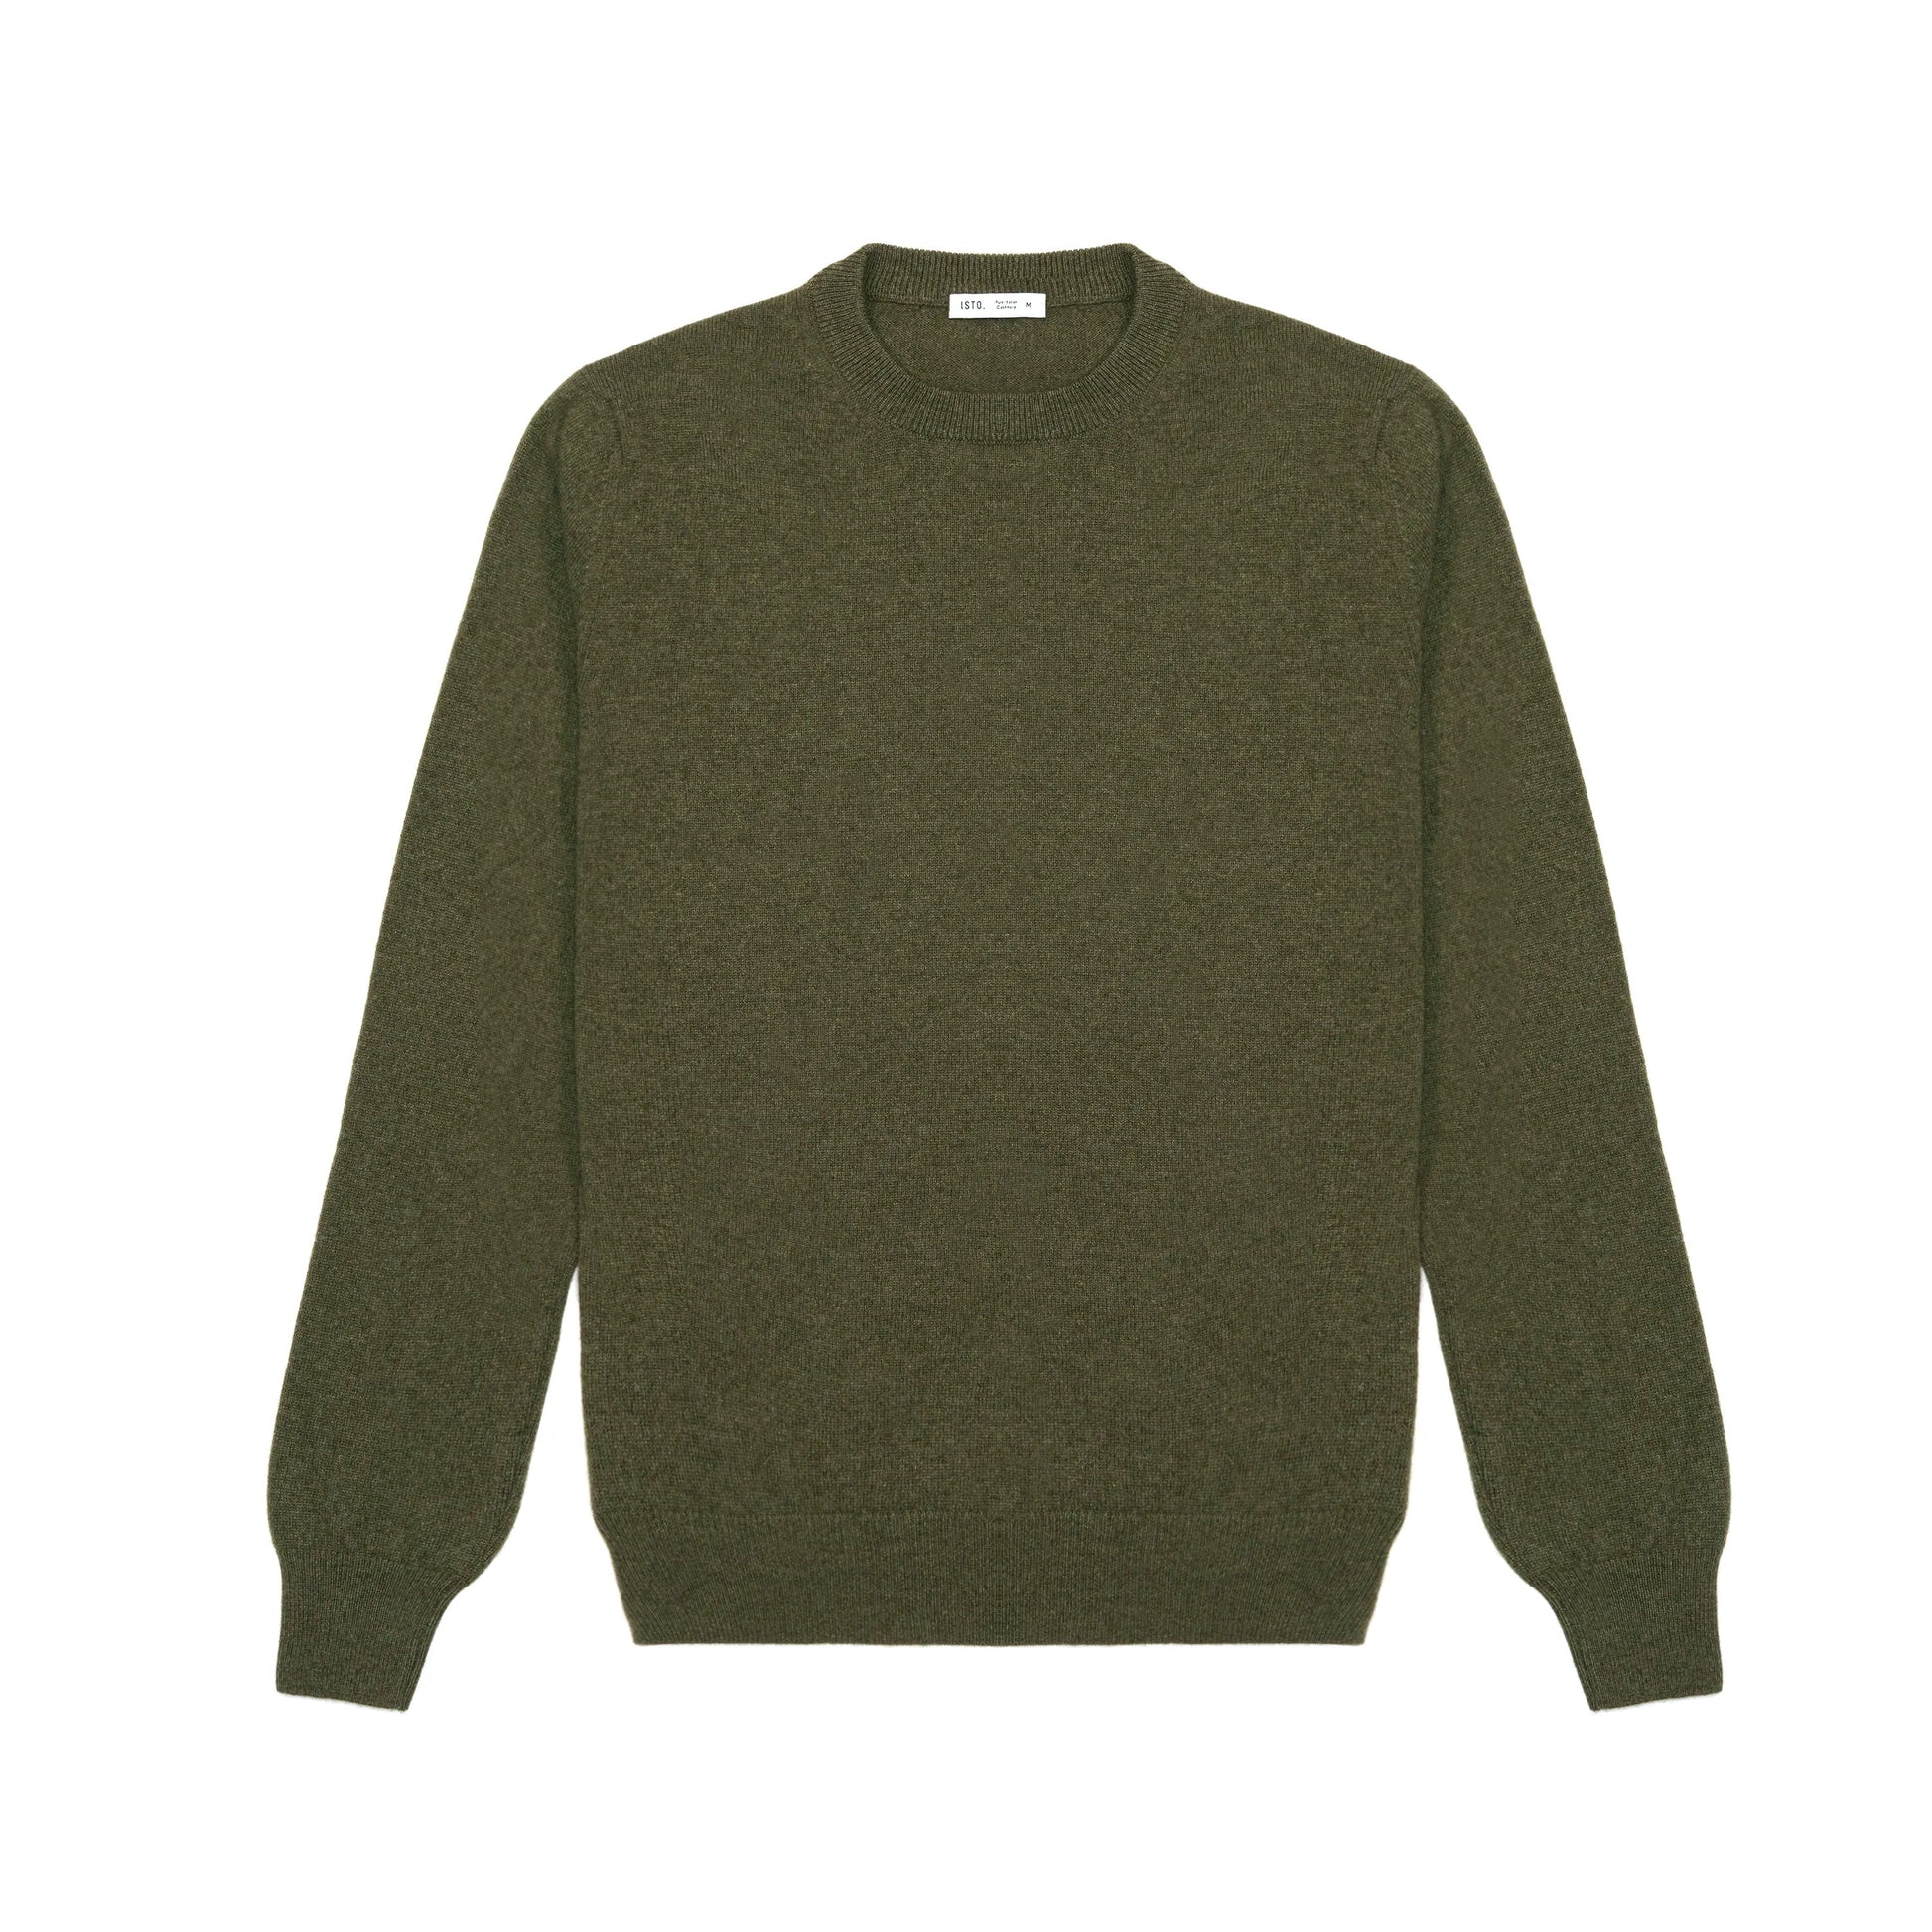 Pure cashmere crewneck sweater in Green: Luxury Italian Knitwear